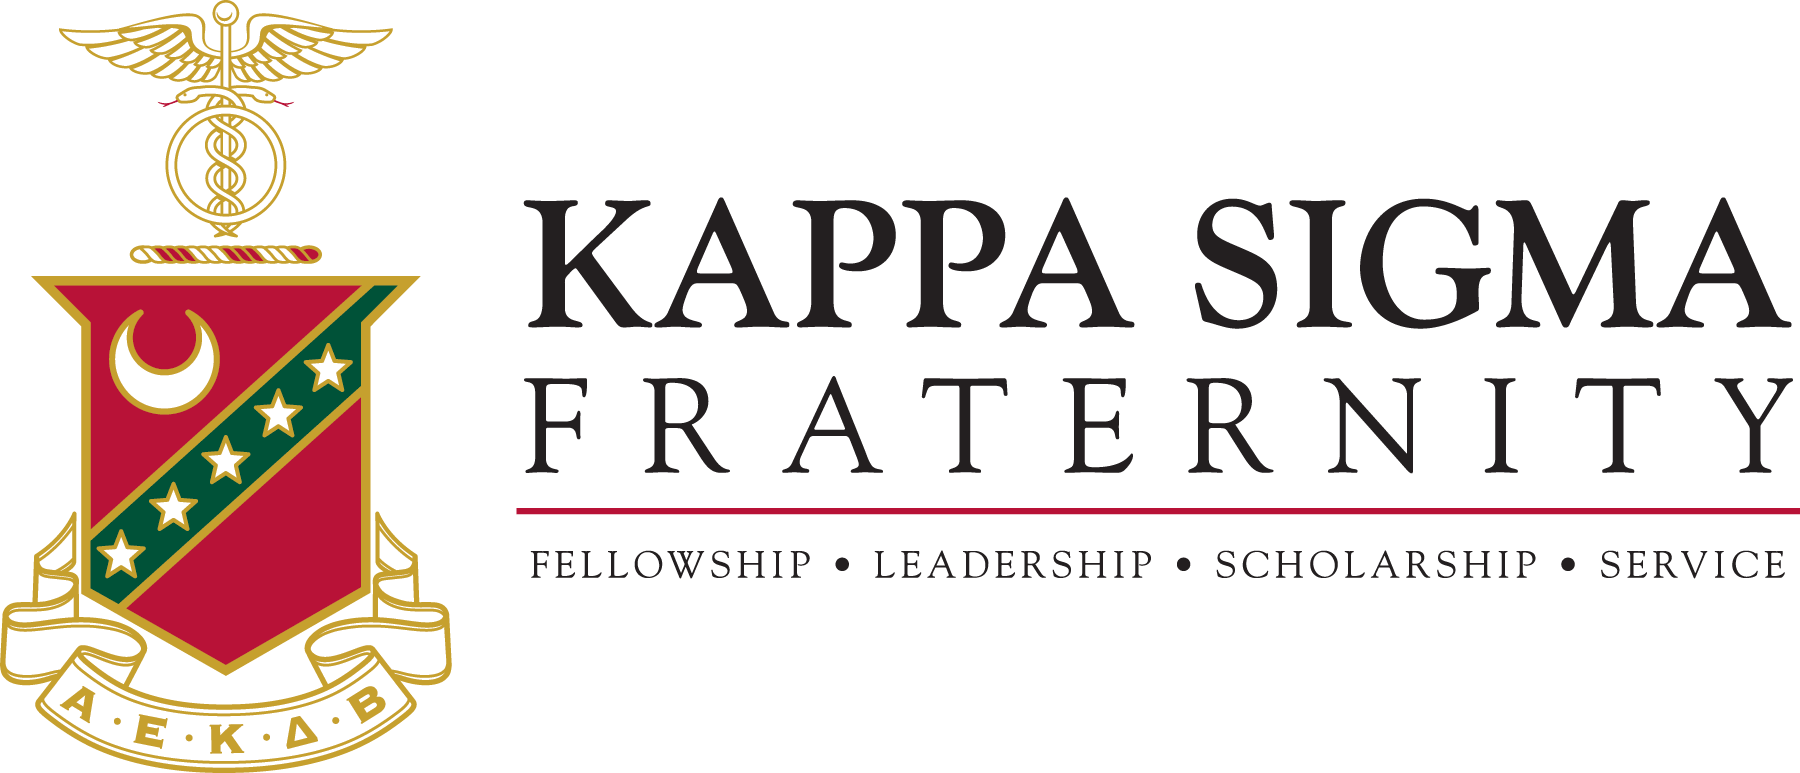 Fraternity Logo - Logos and Icons - Kappa Sigma Fraternity